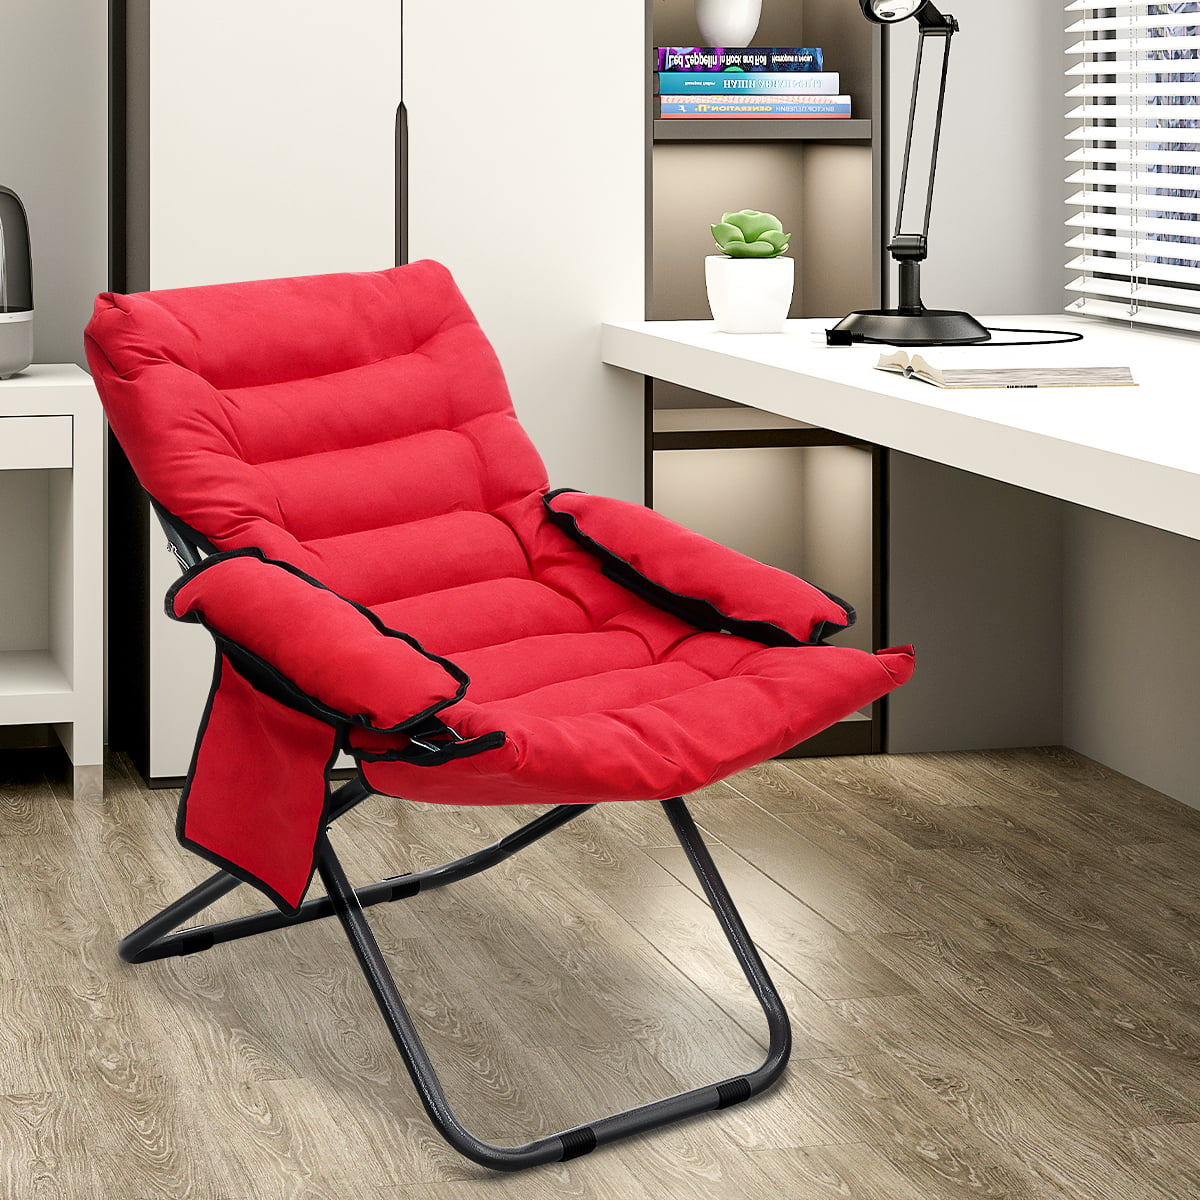 Storage Chaise Lounge Chair • Andrewlymanart